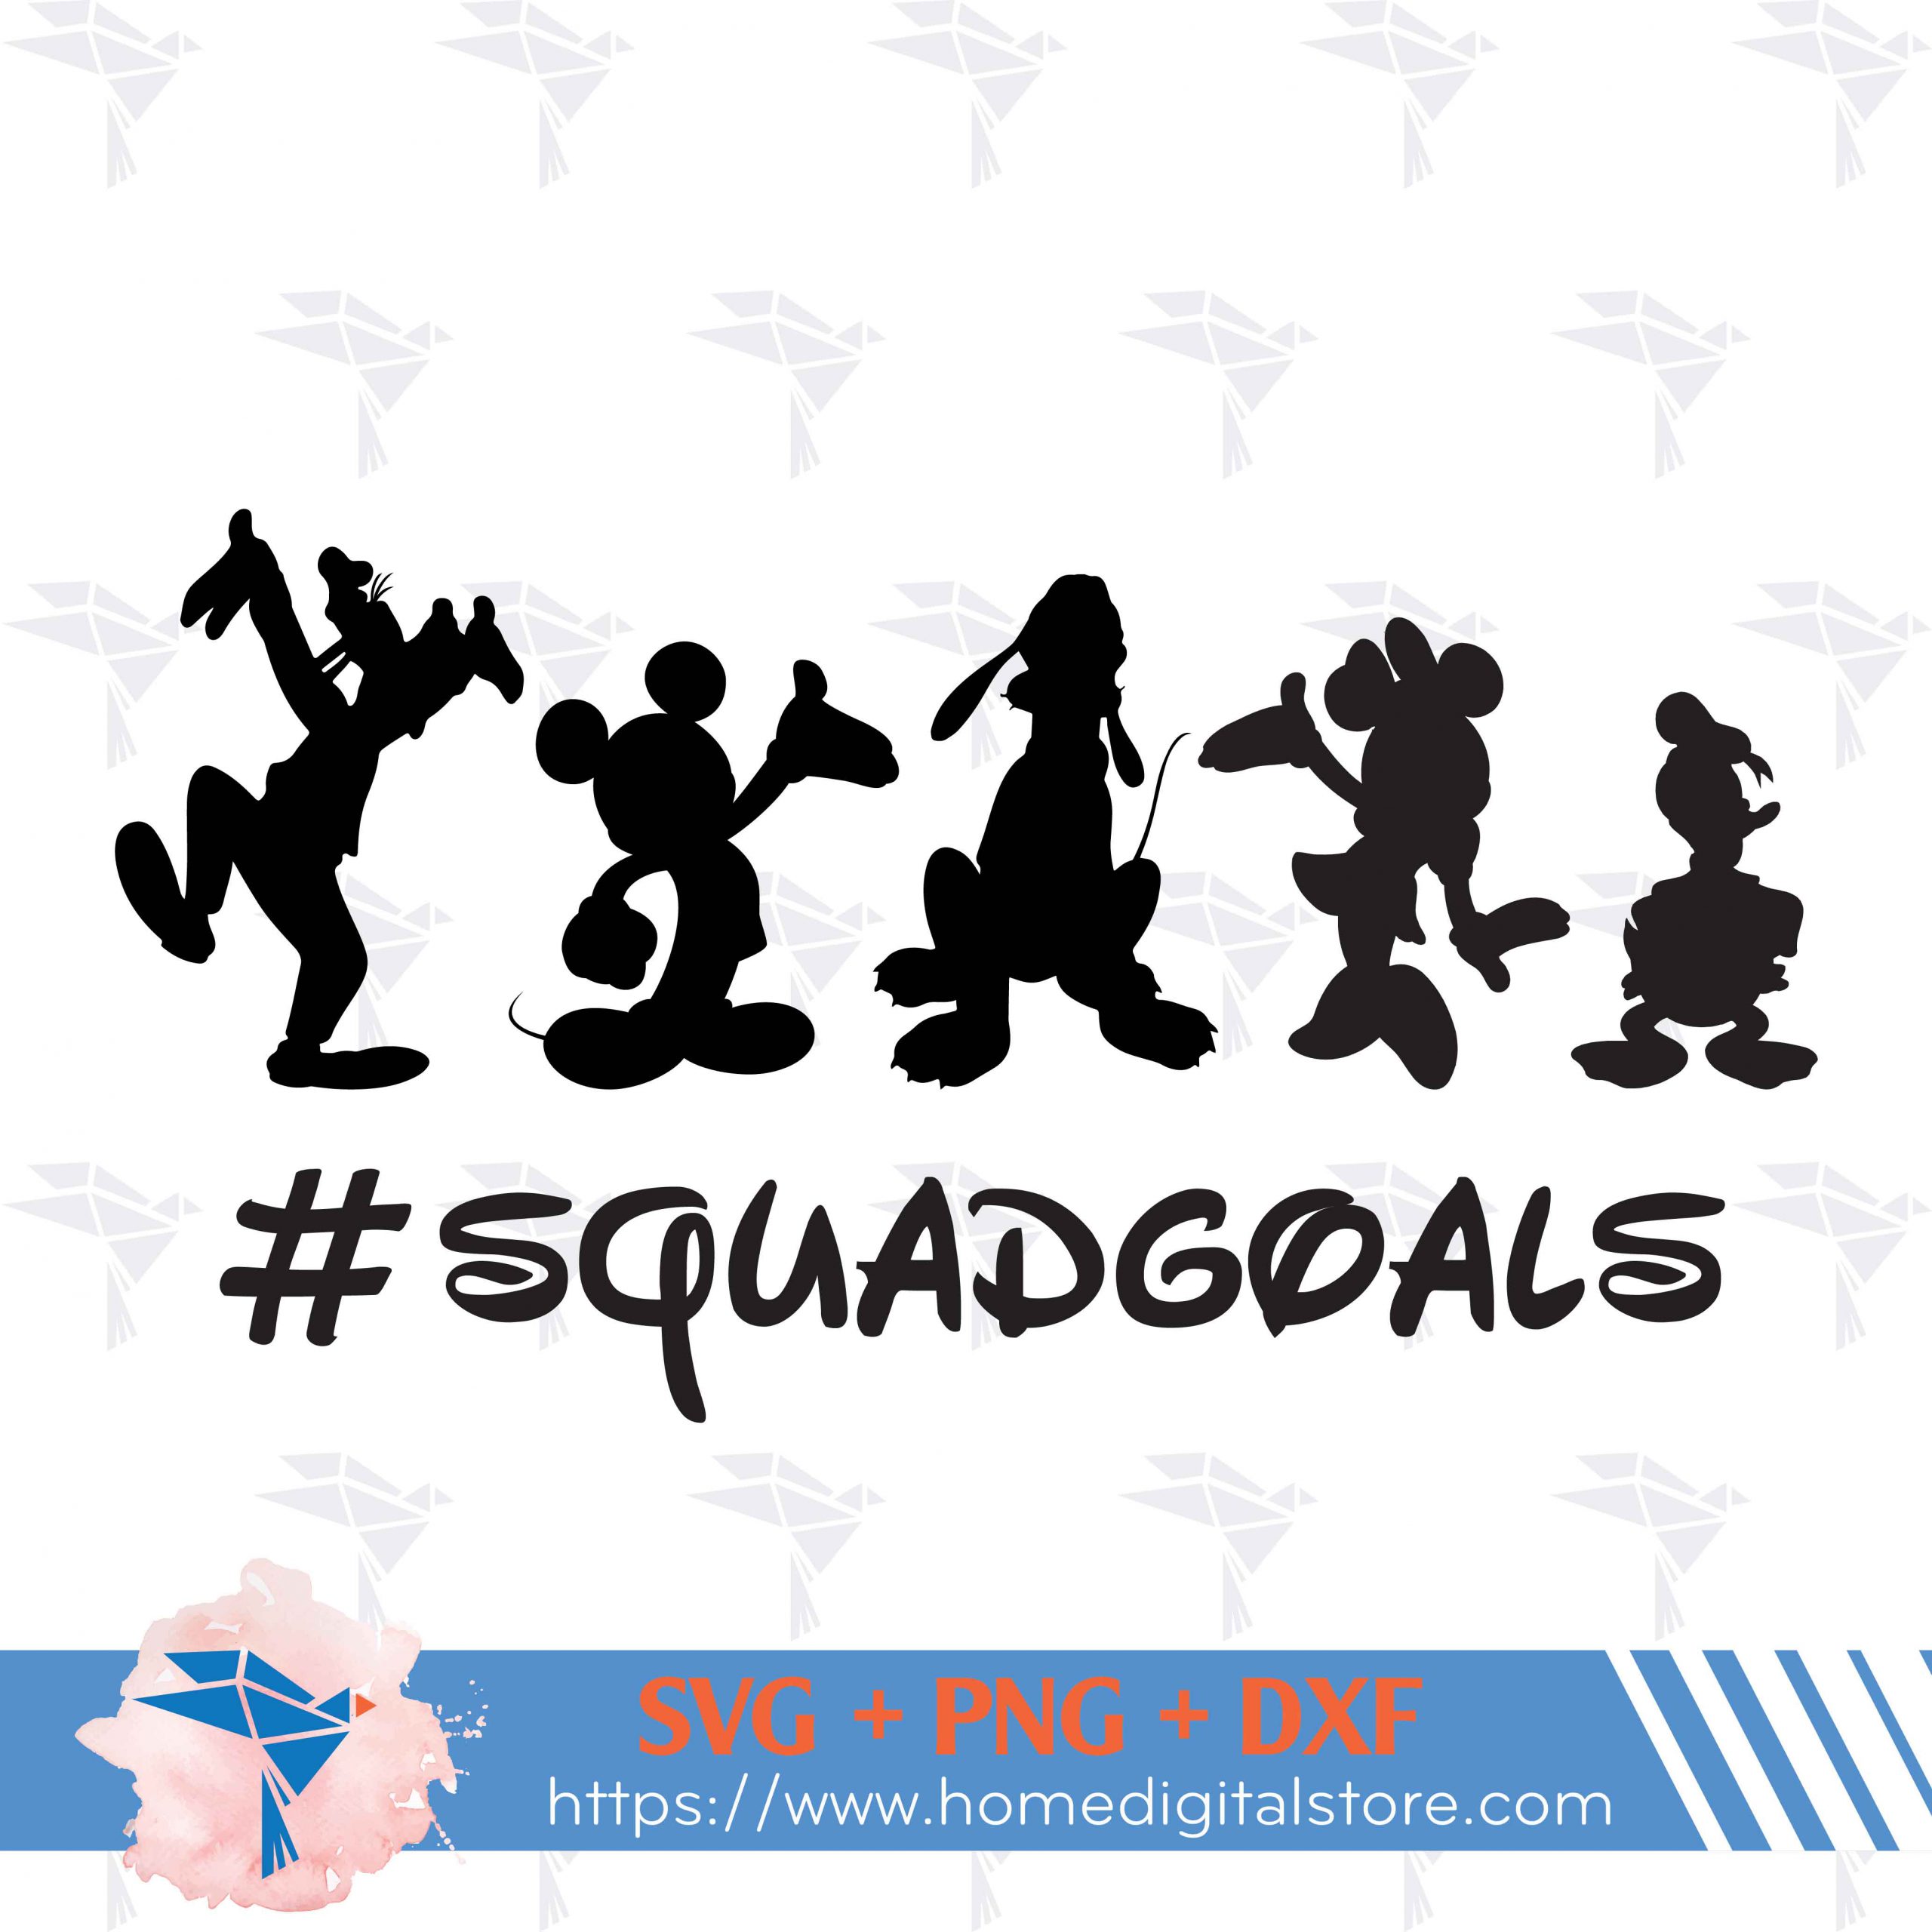 Disney Squad Goals SVG, PNG, DXF Instant Download Files For Cricut